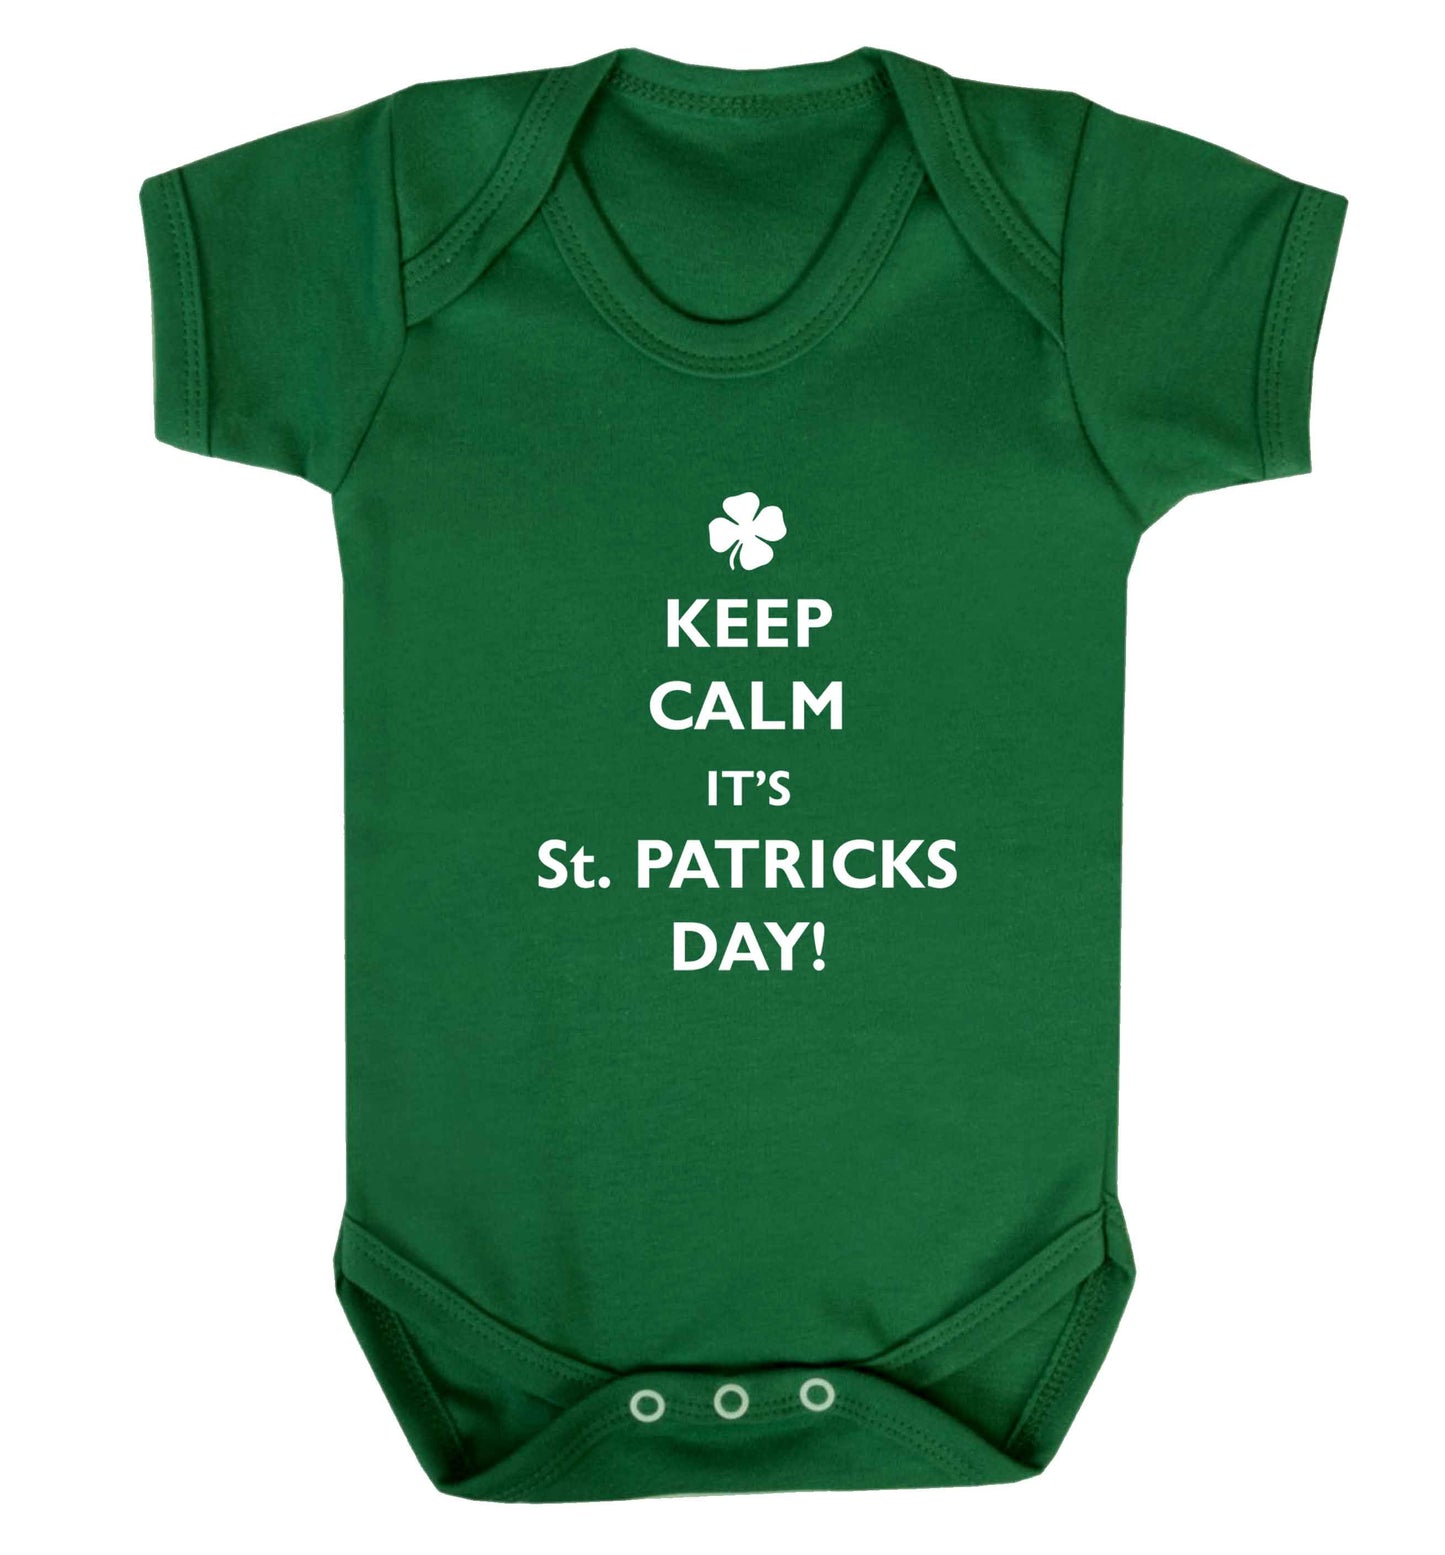 Keep calm it's St.Patricks day baby vest green 18-24 months